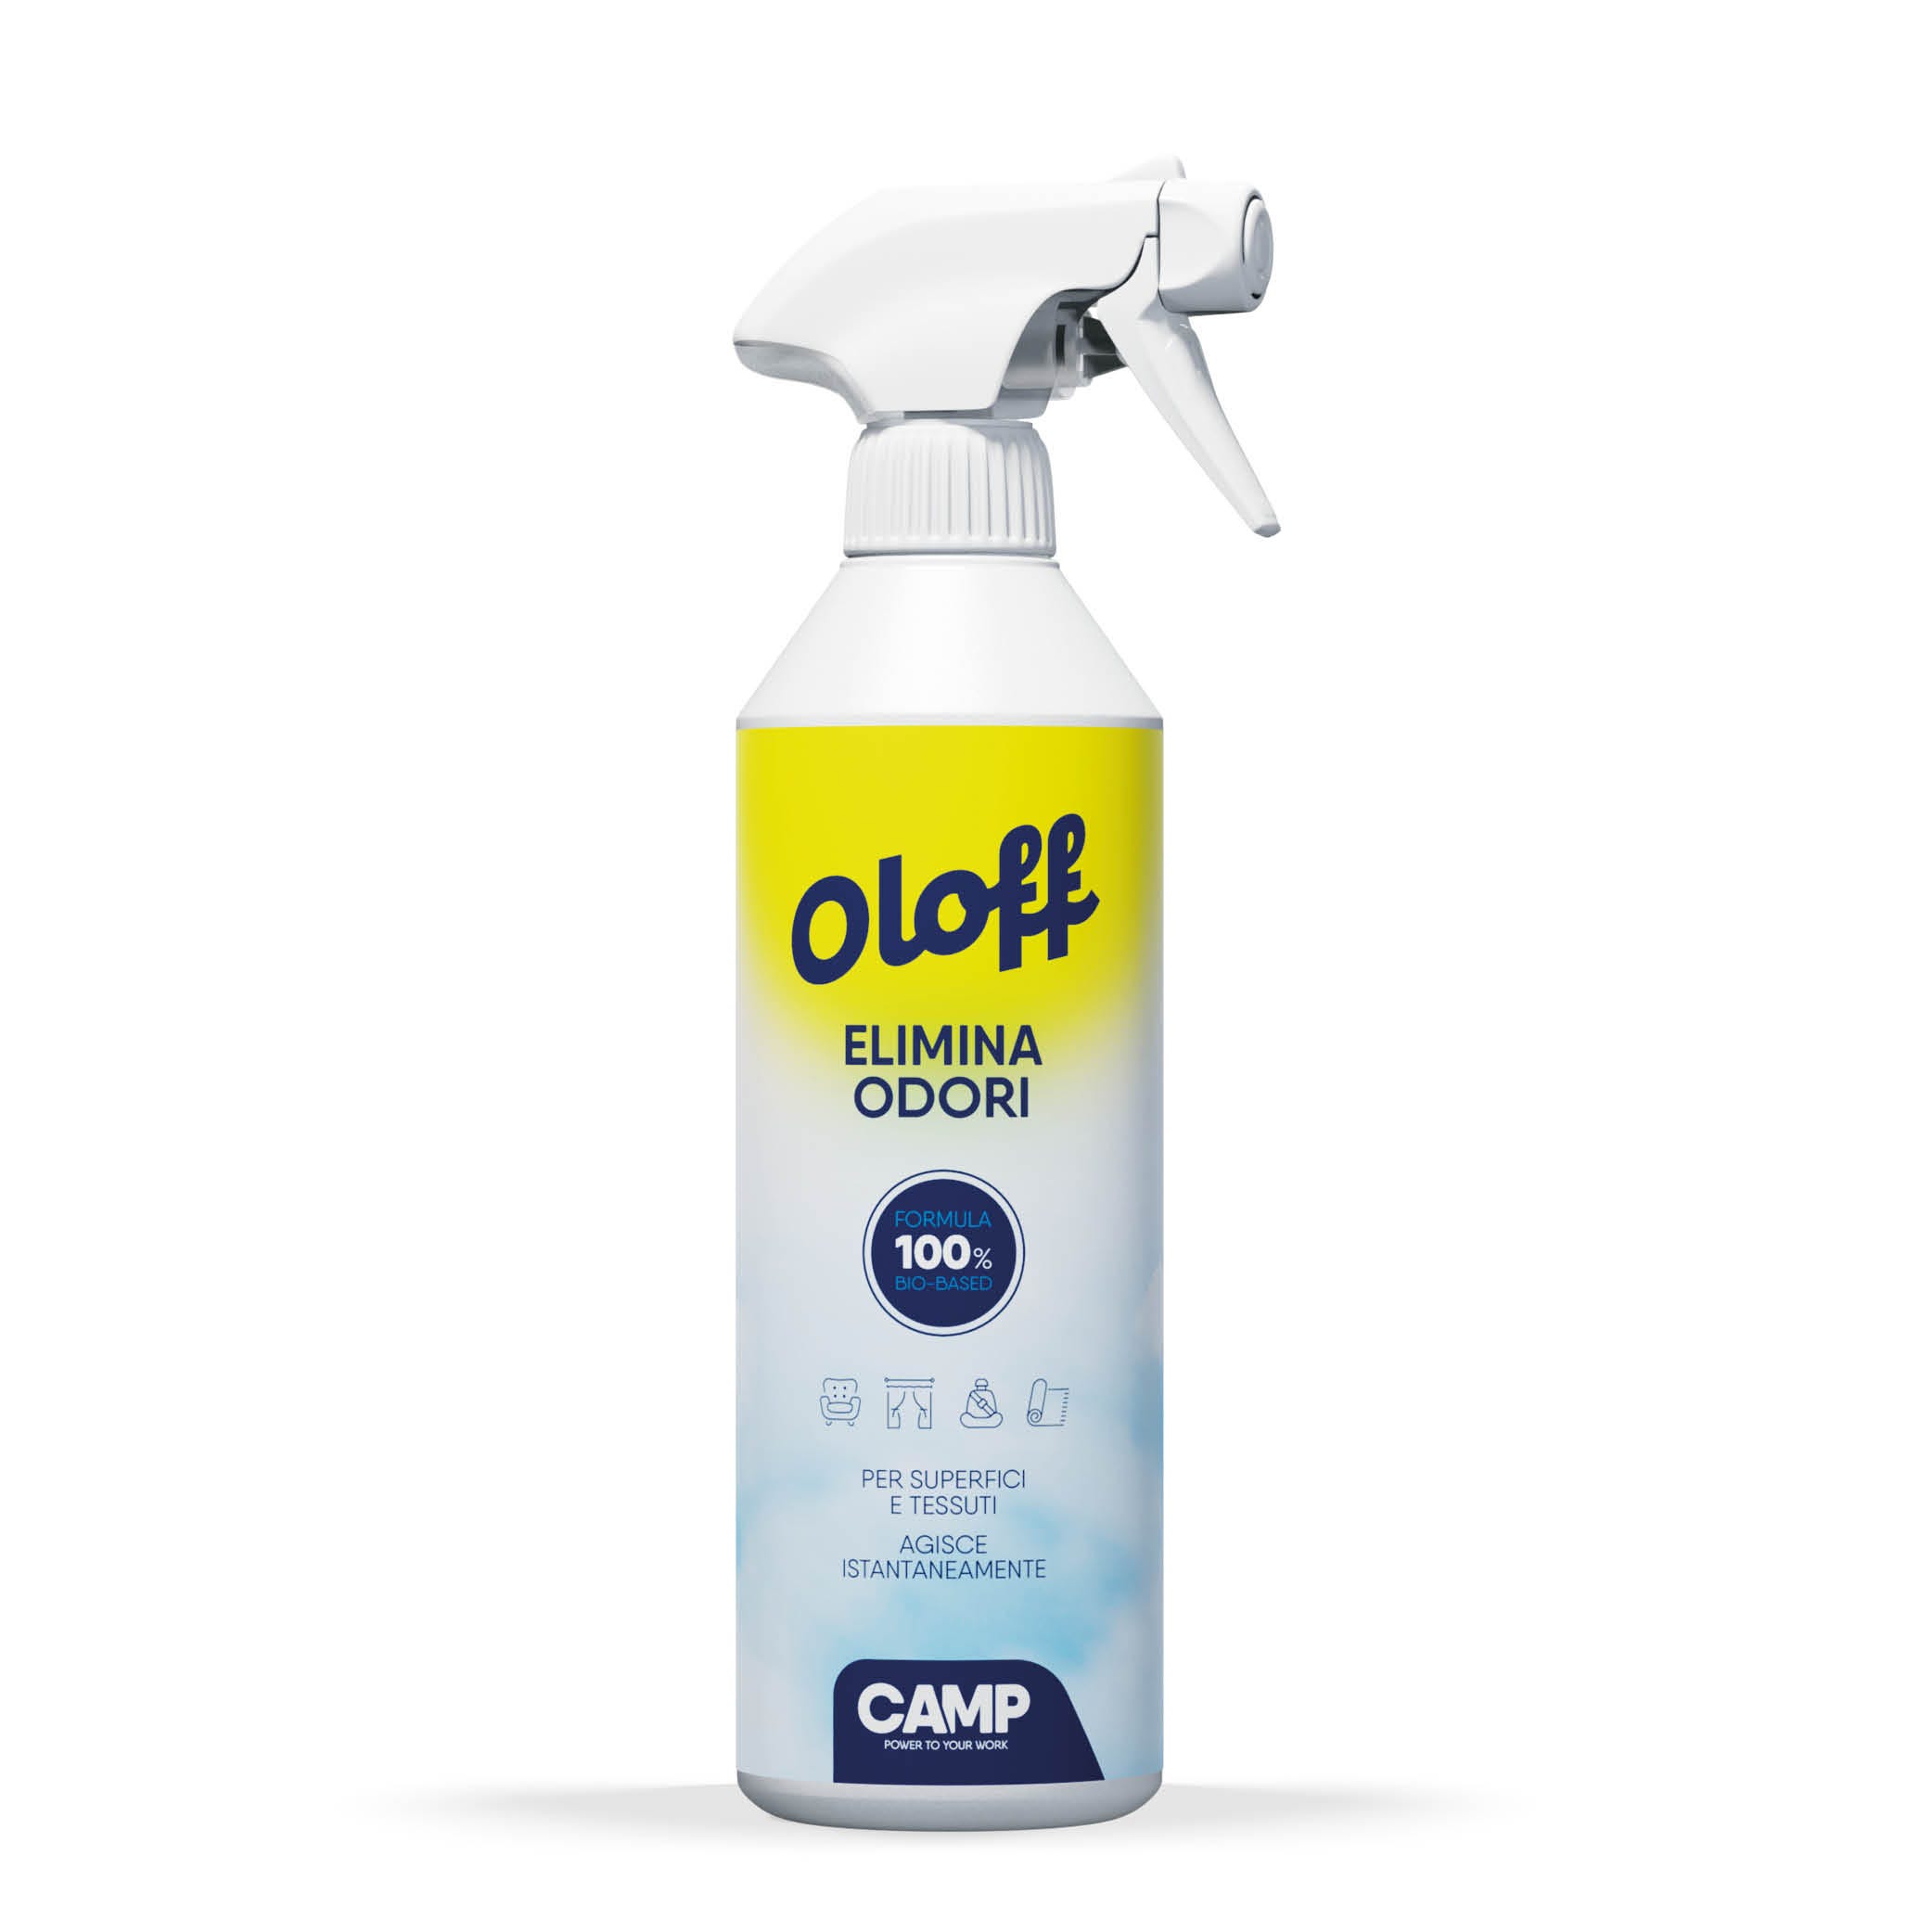 Camp OLOFF AIR, Elimina odori spray, per superfici, tessuti e ambienti